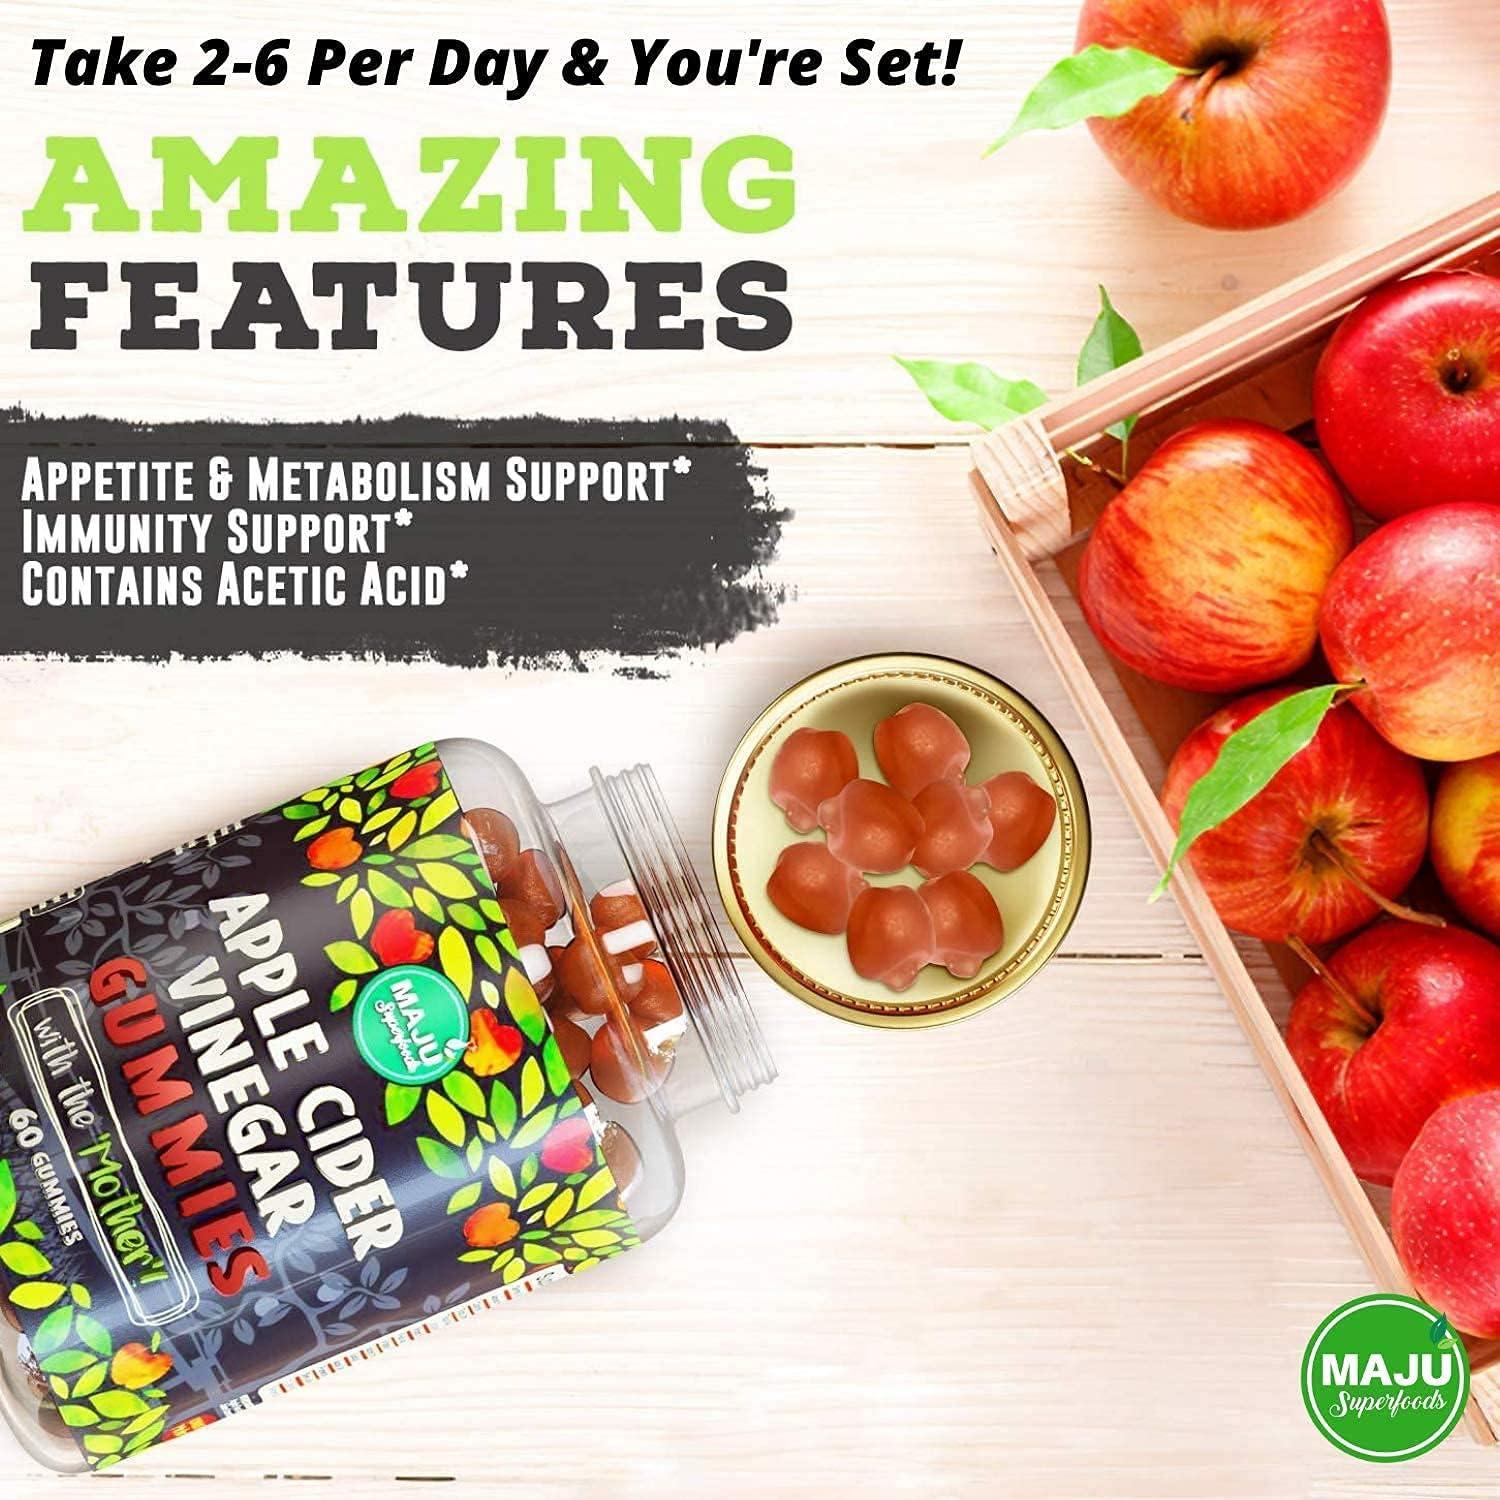 Tasty, Vegan Apple Cider Vinegar (ACV) Gummies by Superfooods